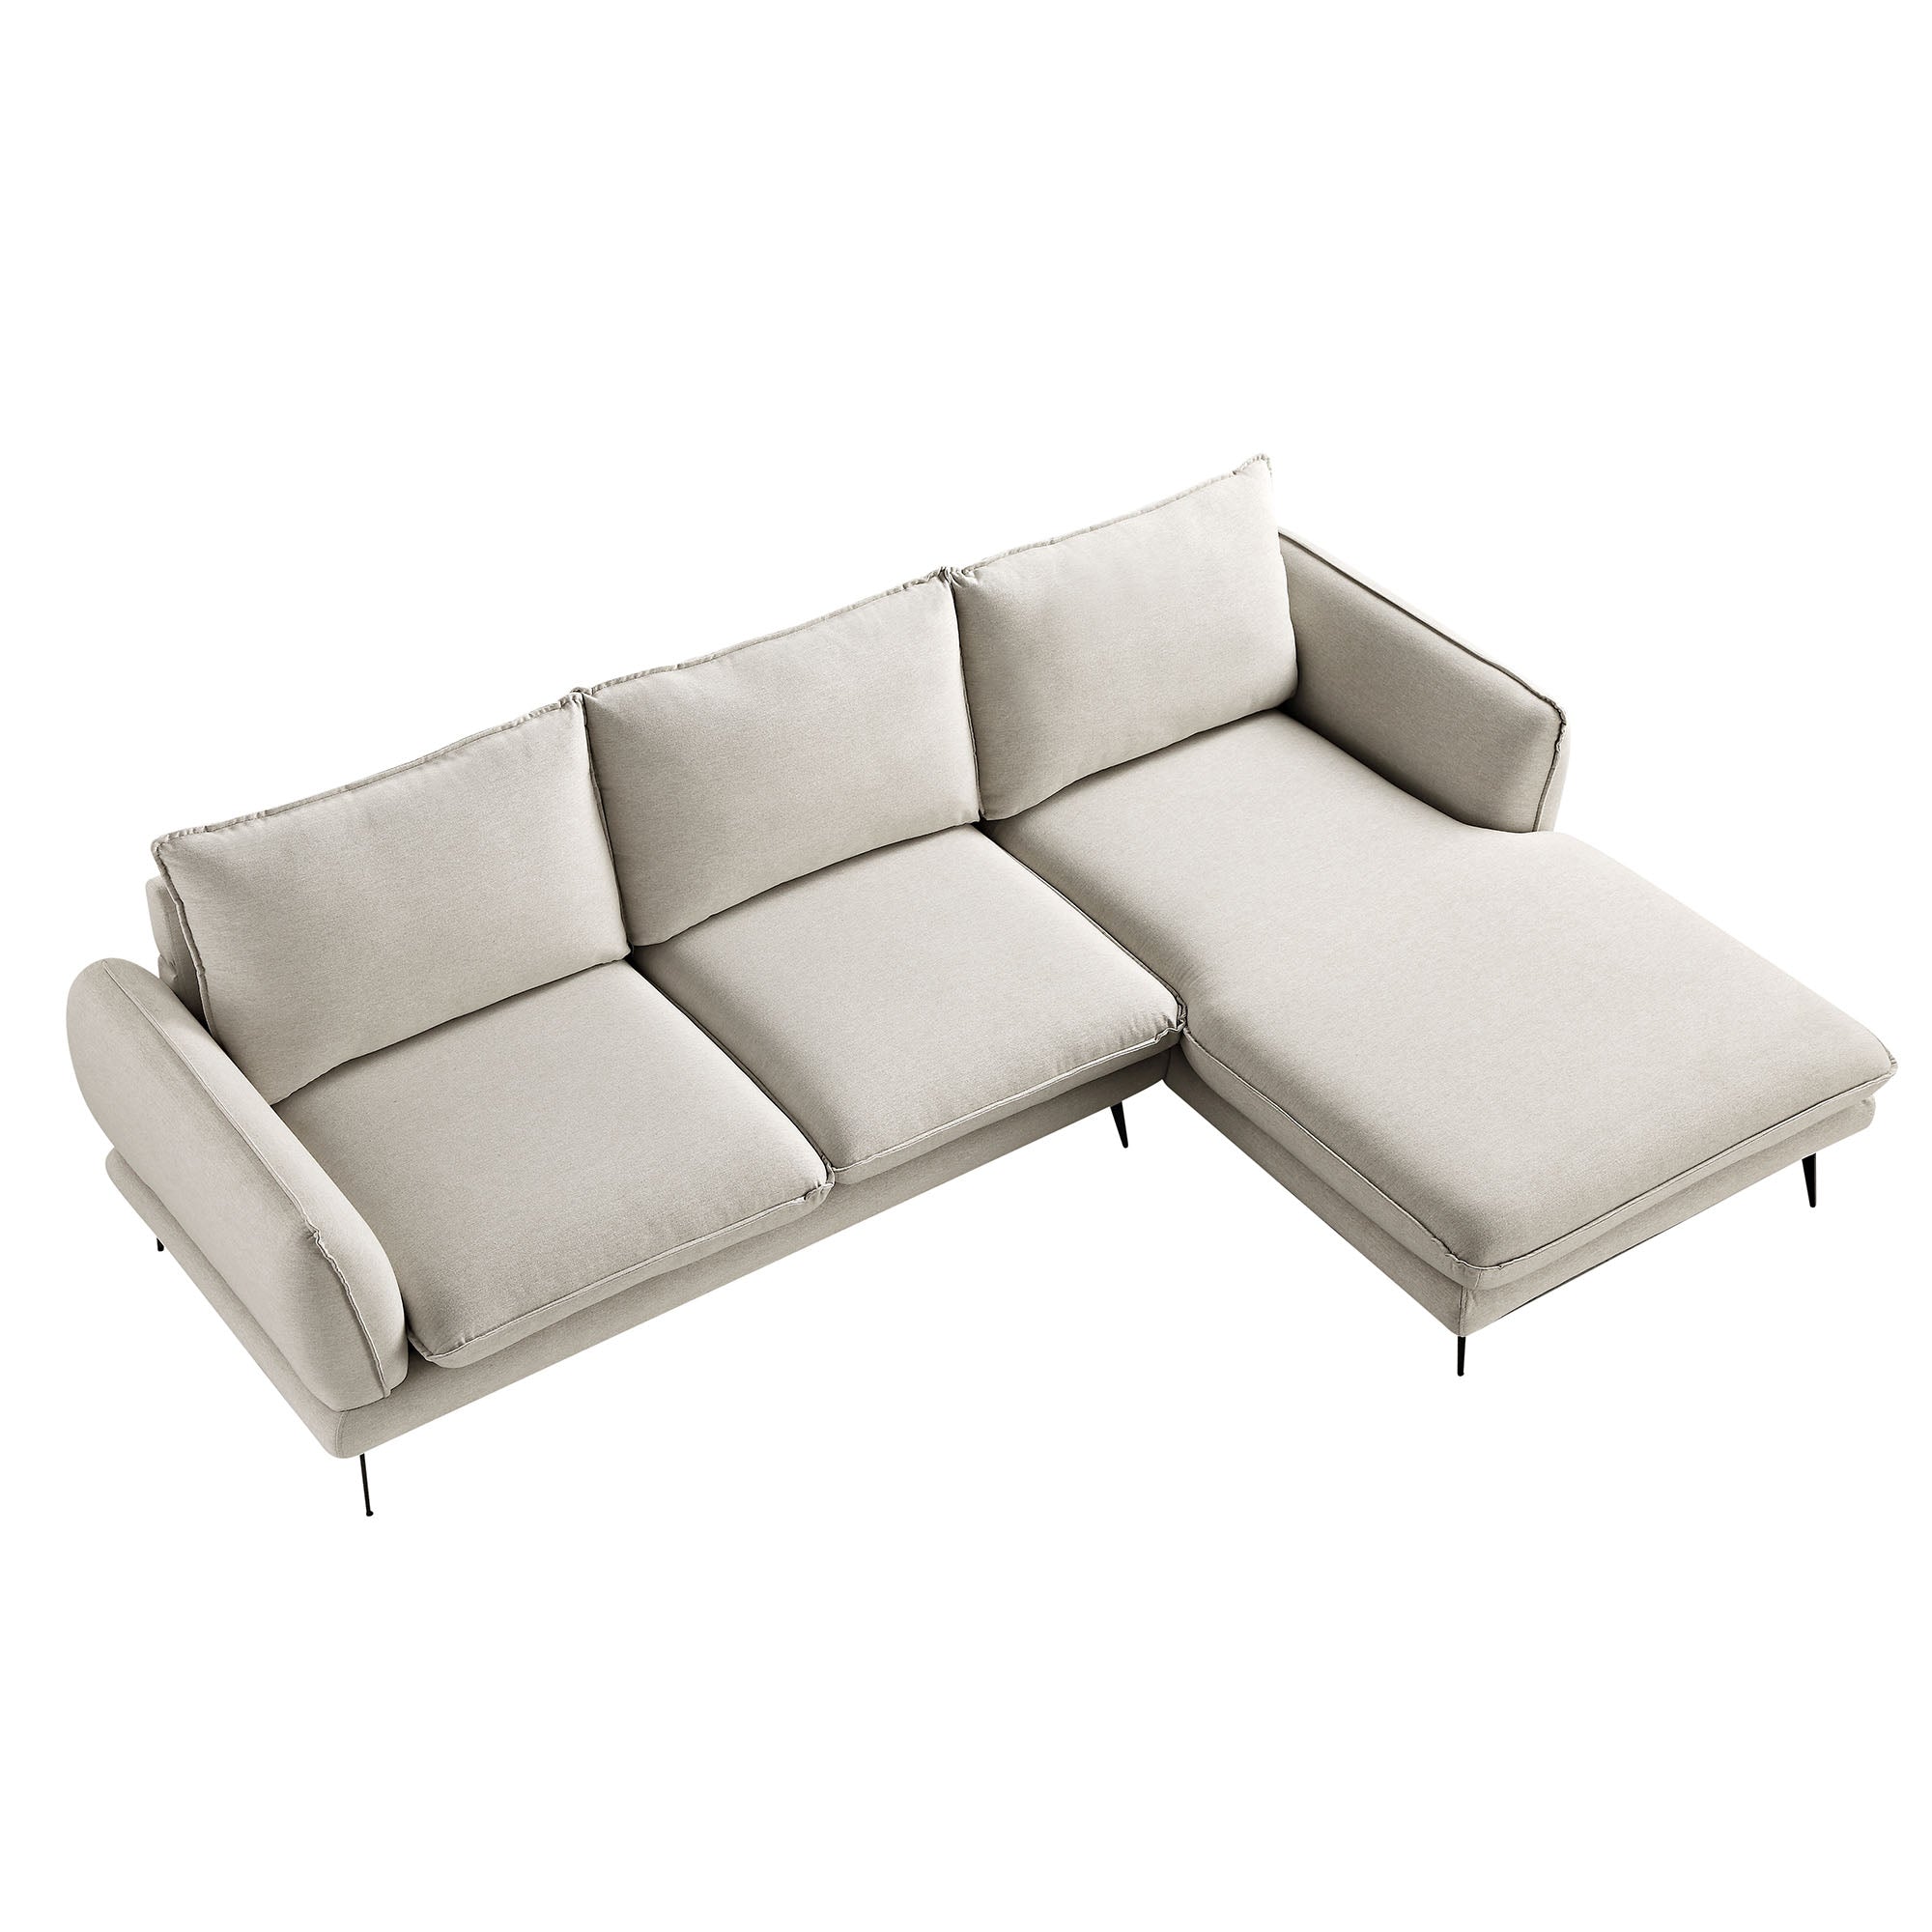 Obriel Oatmeal Fabric Sofa, Grande Chaise Sofa Right Hand